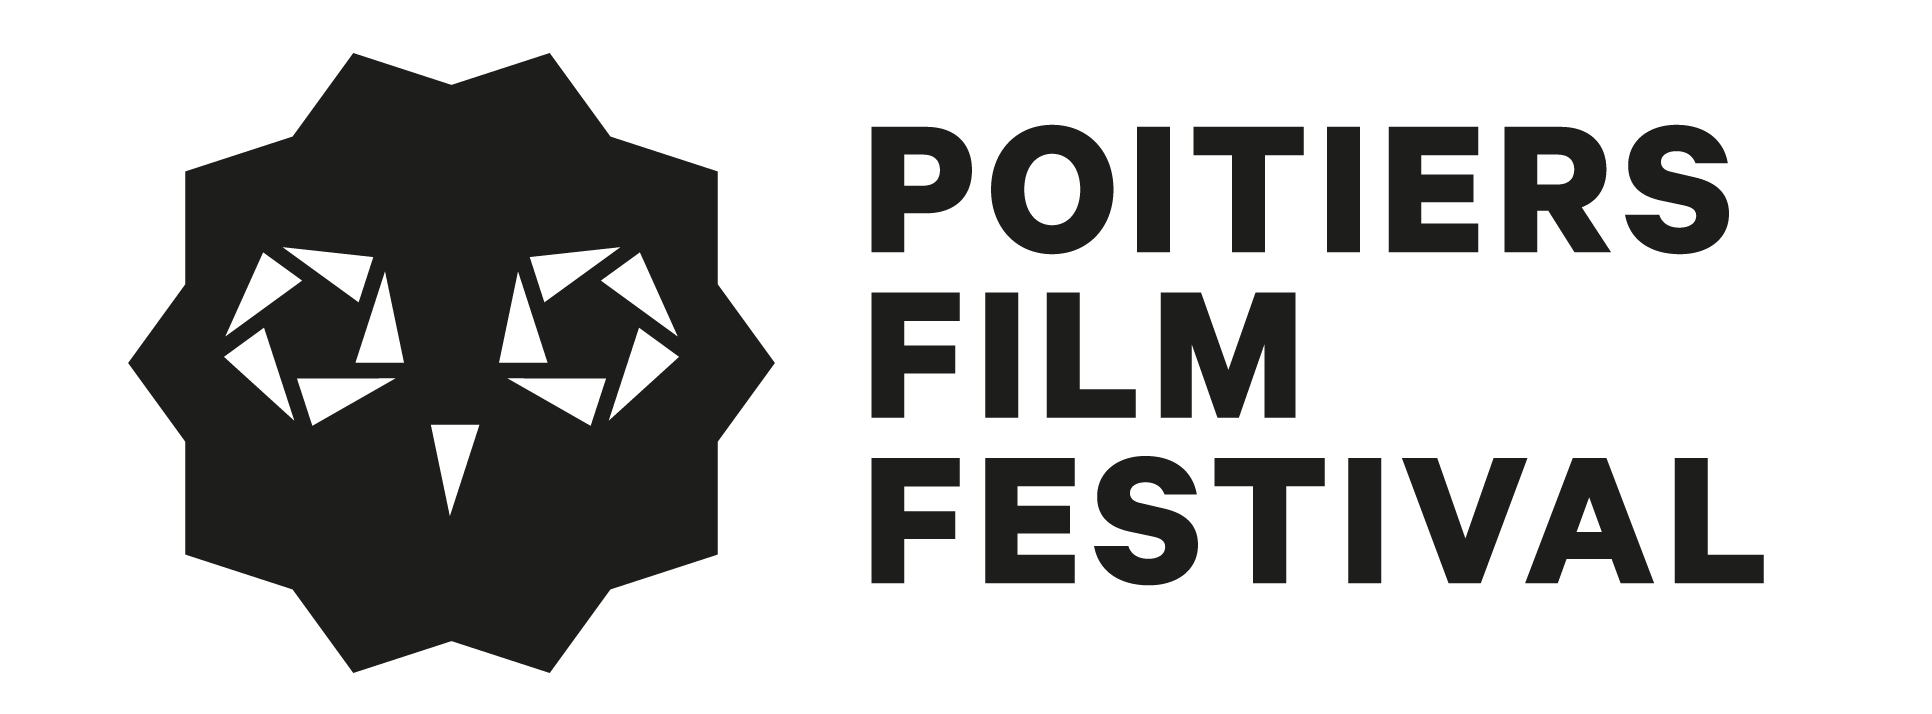 Poitiers Film Festival - Full Circle Lab